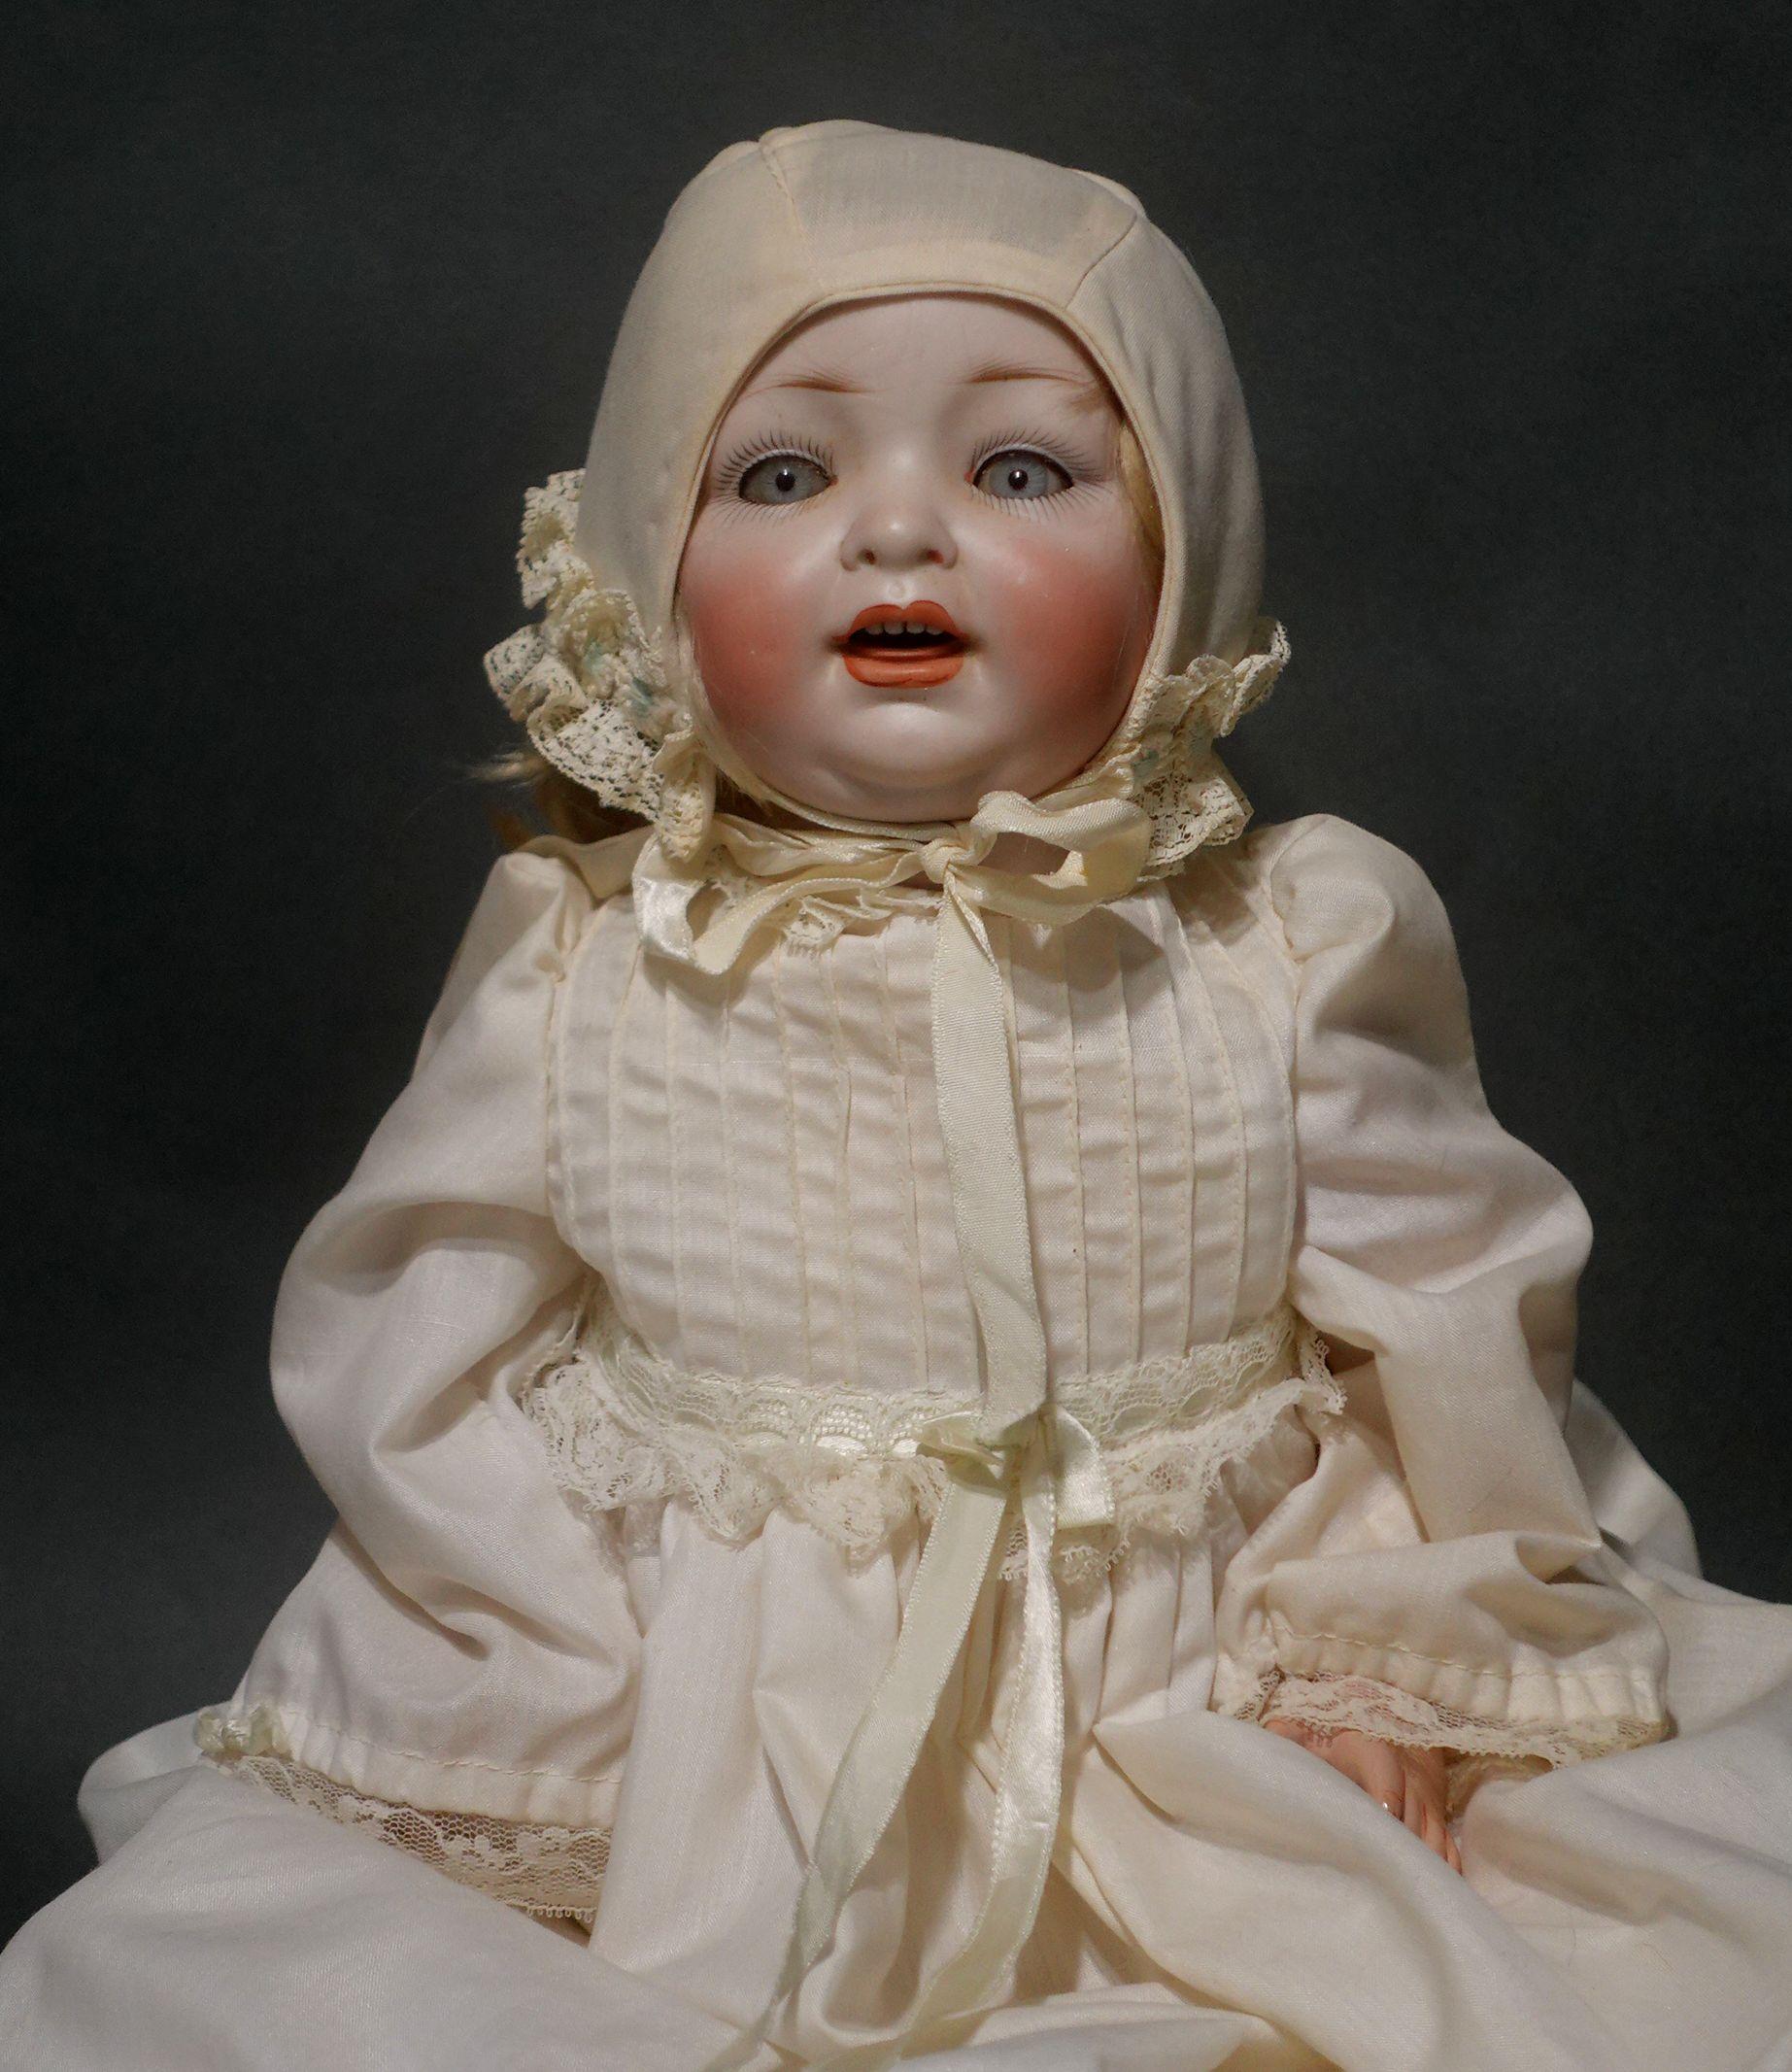 Brushed Antique German Bisque Doll #152/6 